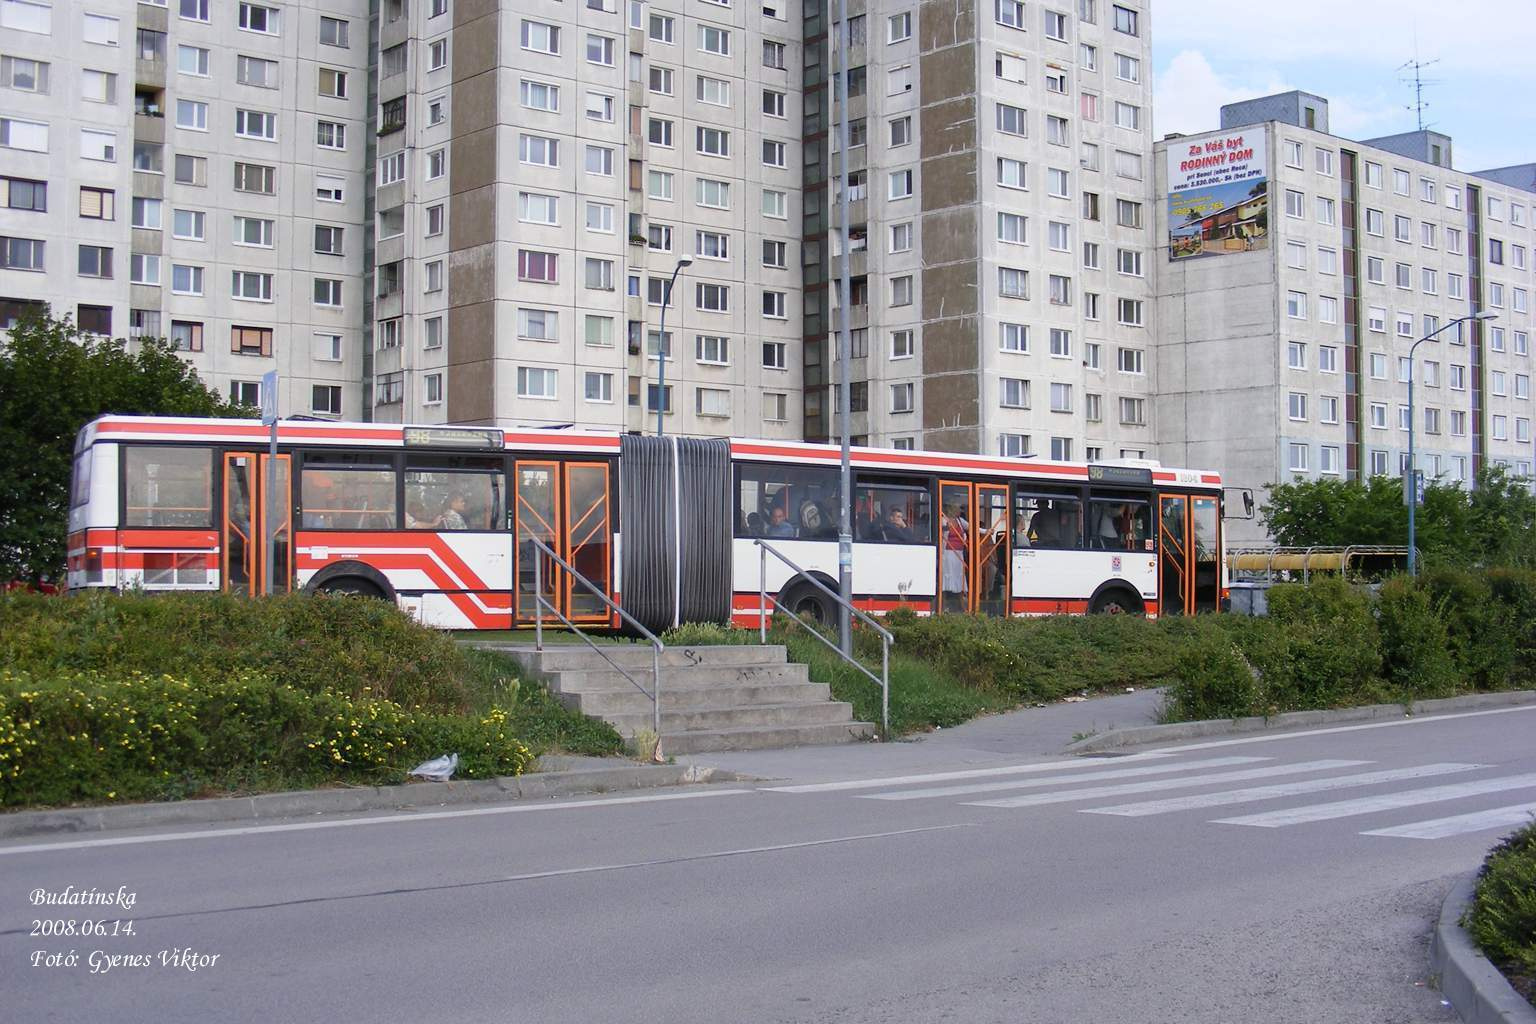 Pozsonyi busz BA-873AD 1